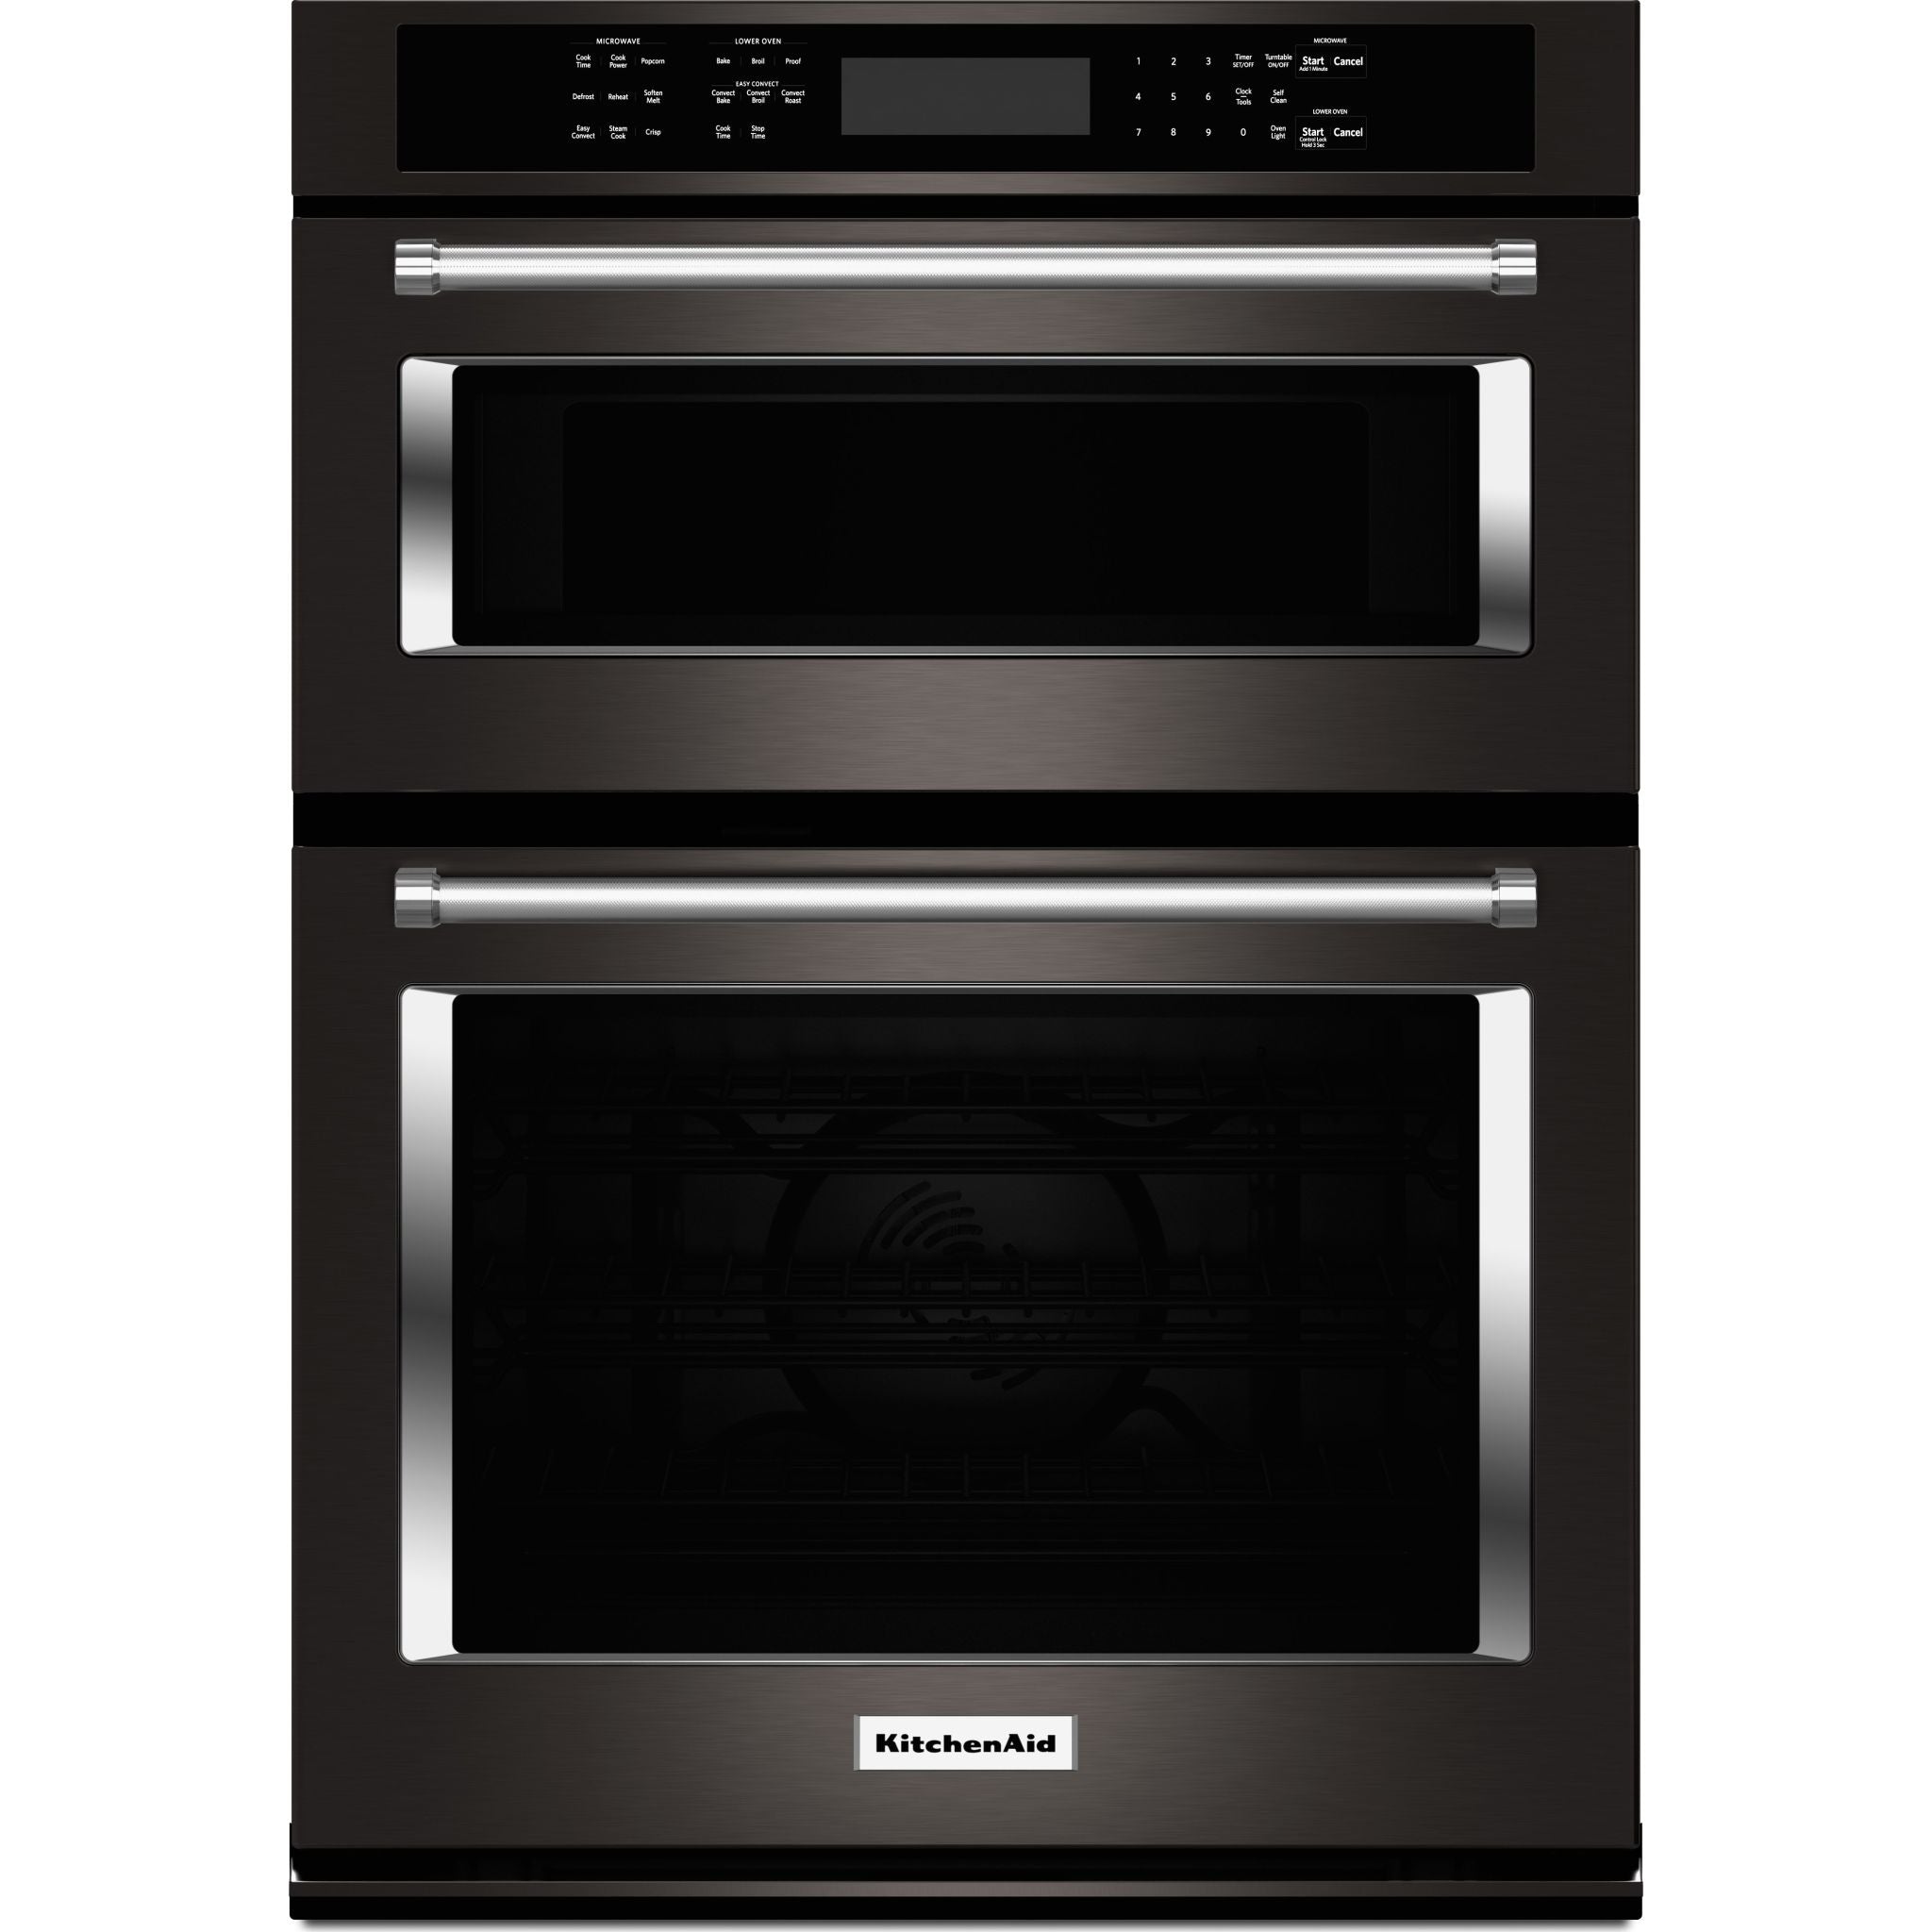 KitchenAid, KitchenAid 30" Microwave/Wall Oven (KOCE500EBS) - Black Stainless